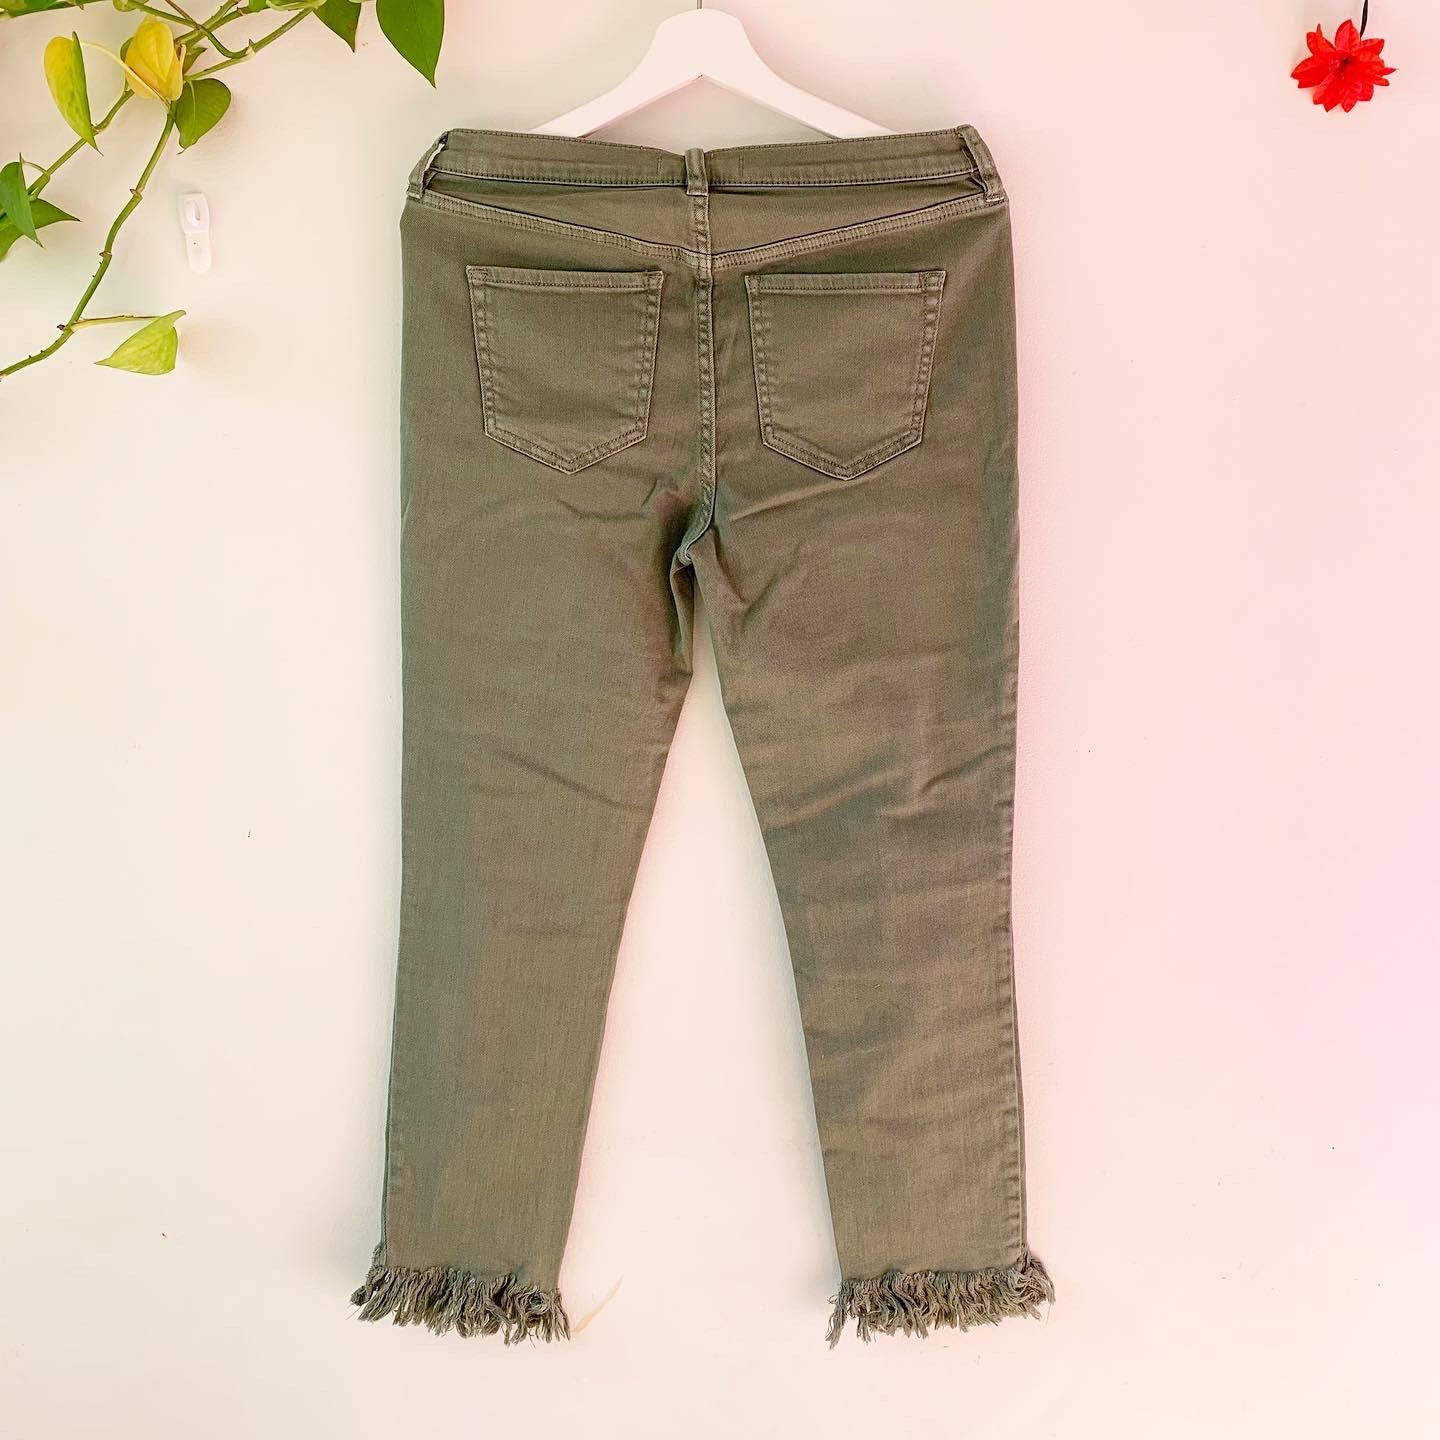 Free People Olive Green Frayed Hem Cropped Skinny Jeans, Size 28